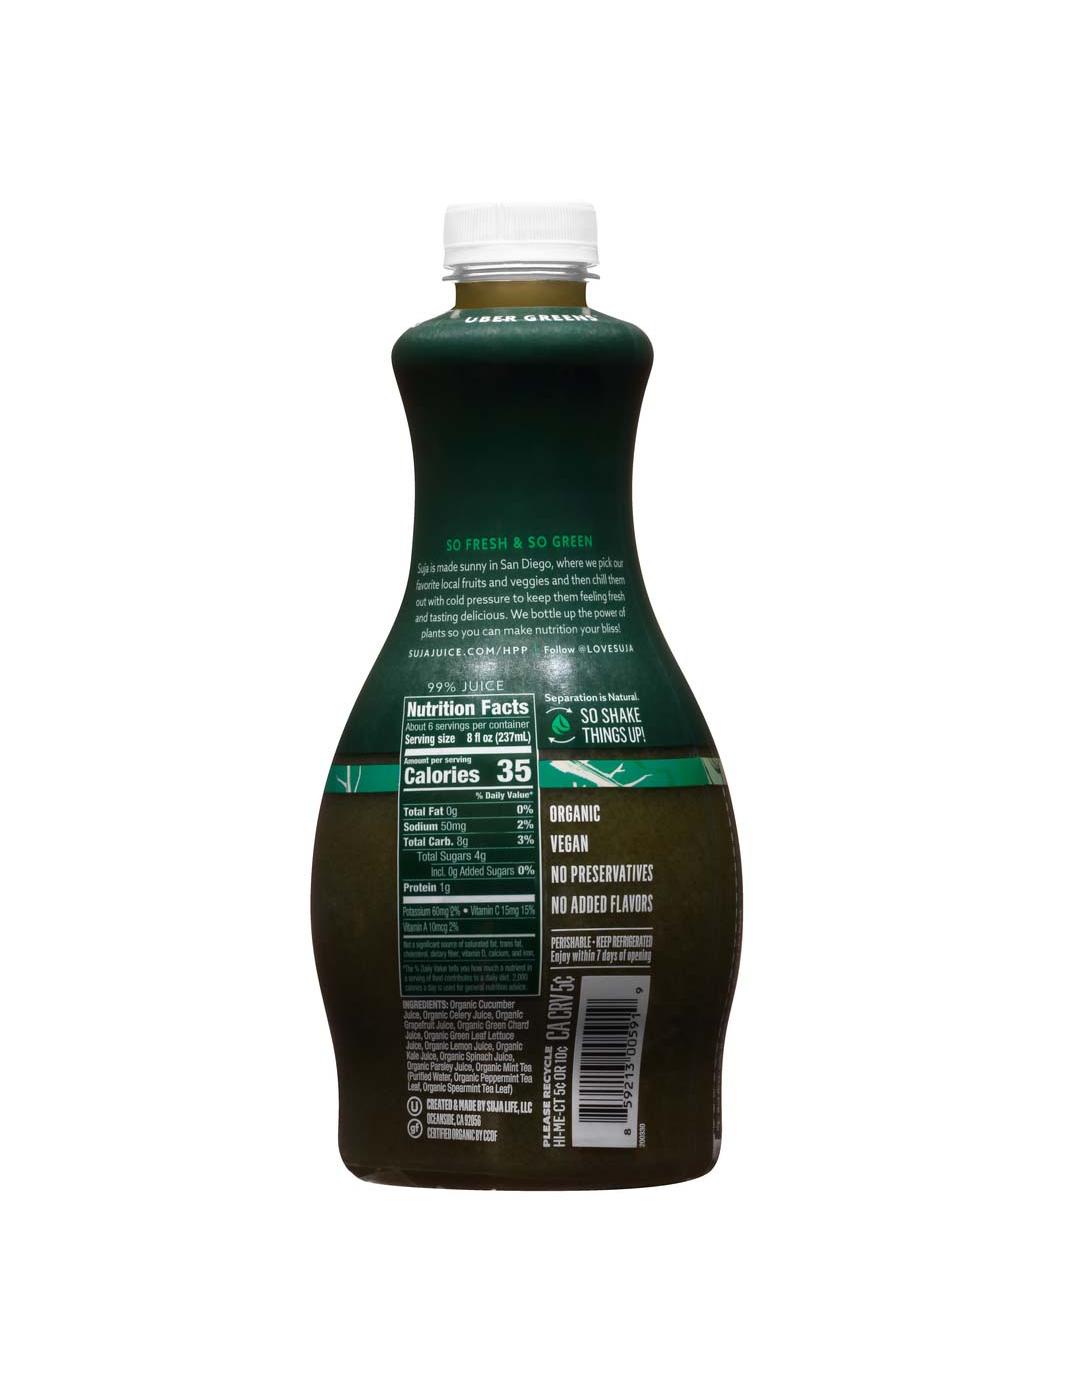 Suja Uber Greens Organic Cold-Pressed Juice; image 2 of 2